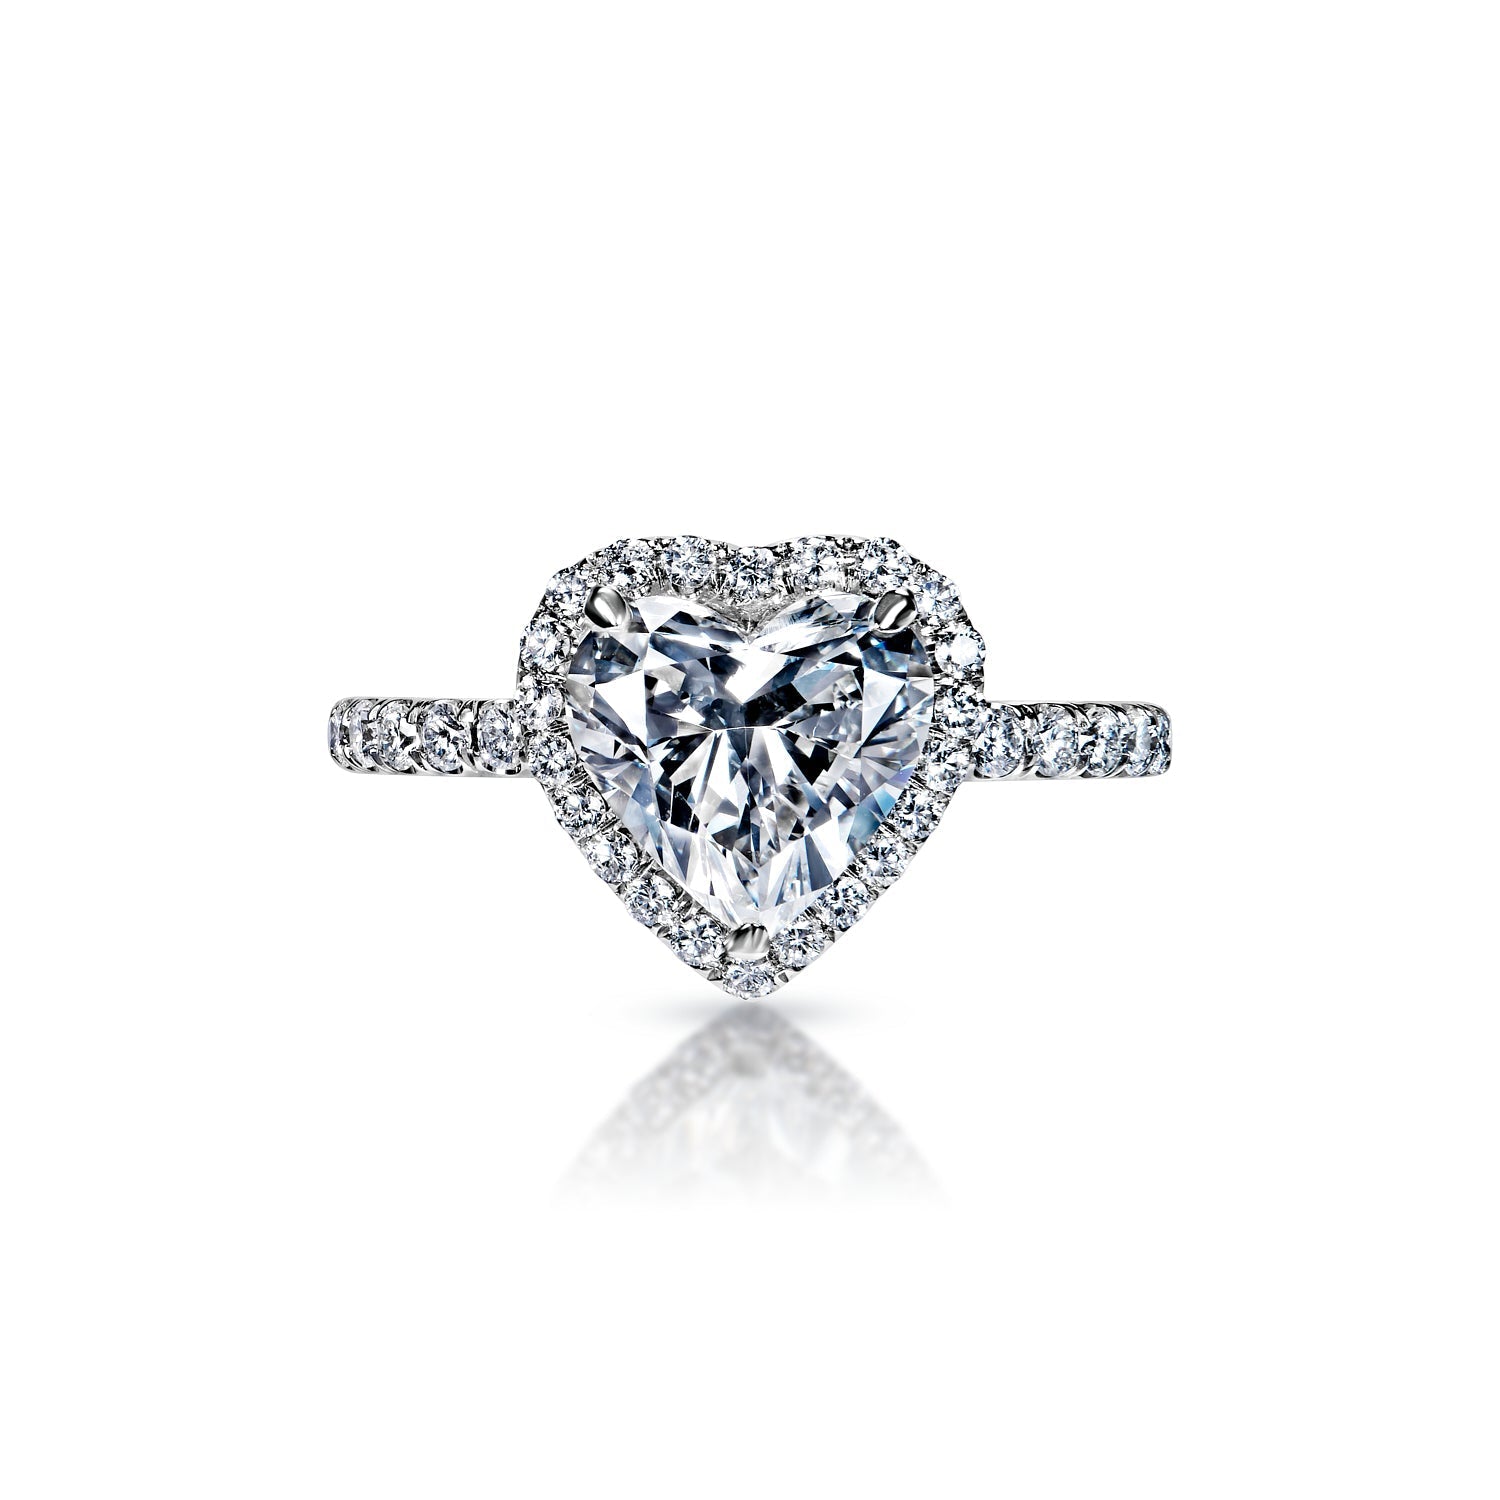 Yaretzi 3 Carat F SI2 Heart Shape Diamond Engagement Ring in Platinum Front View